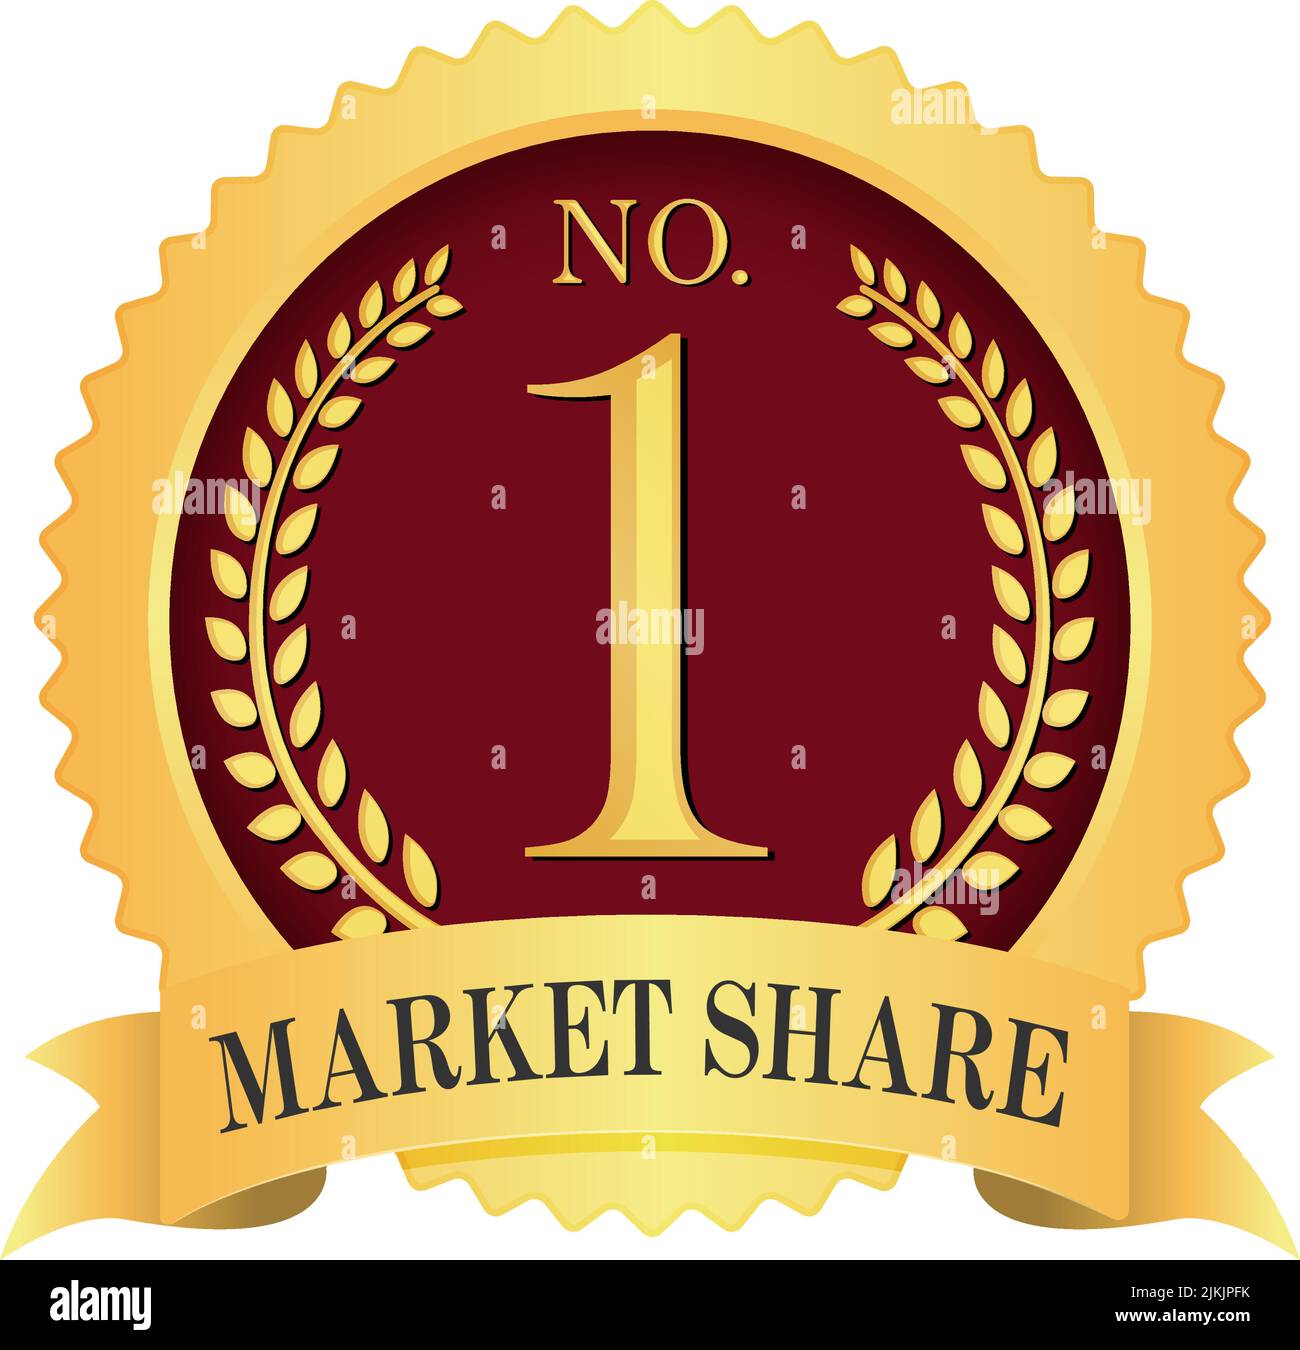 market share logo